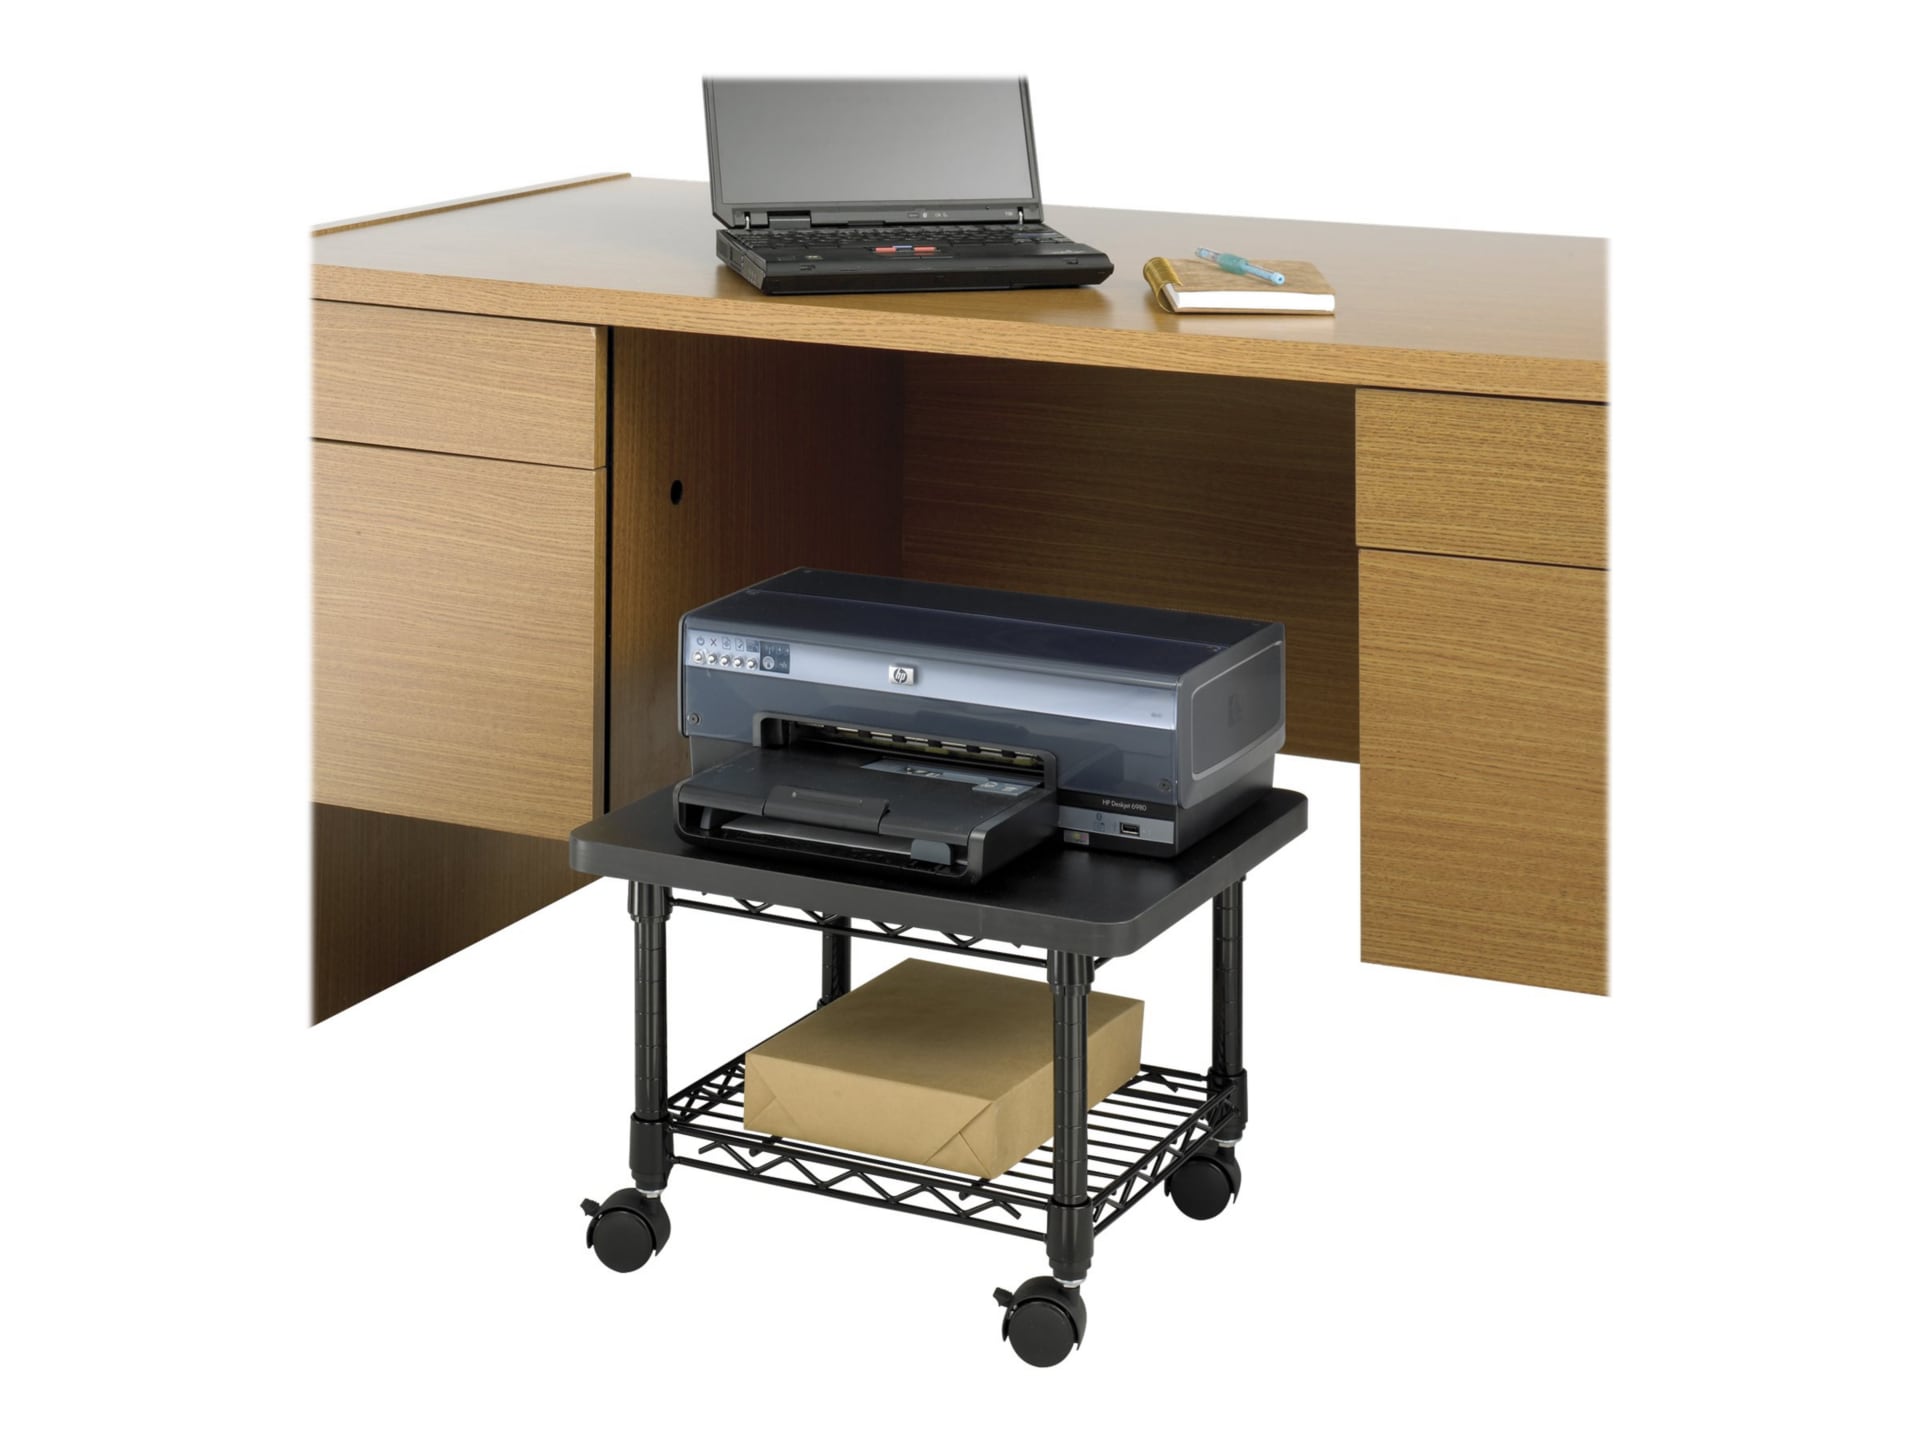 Safco Under Desk Printer Stand 5206bl Furniture Cdw Com